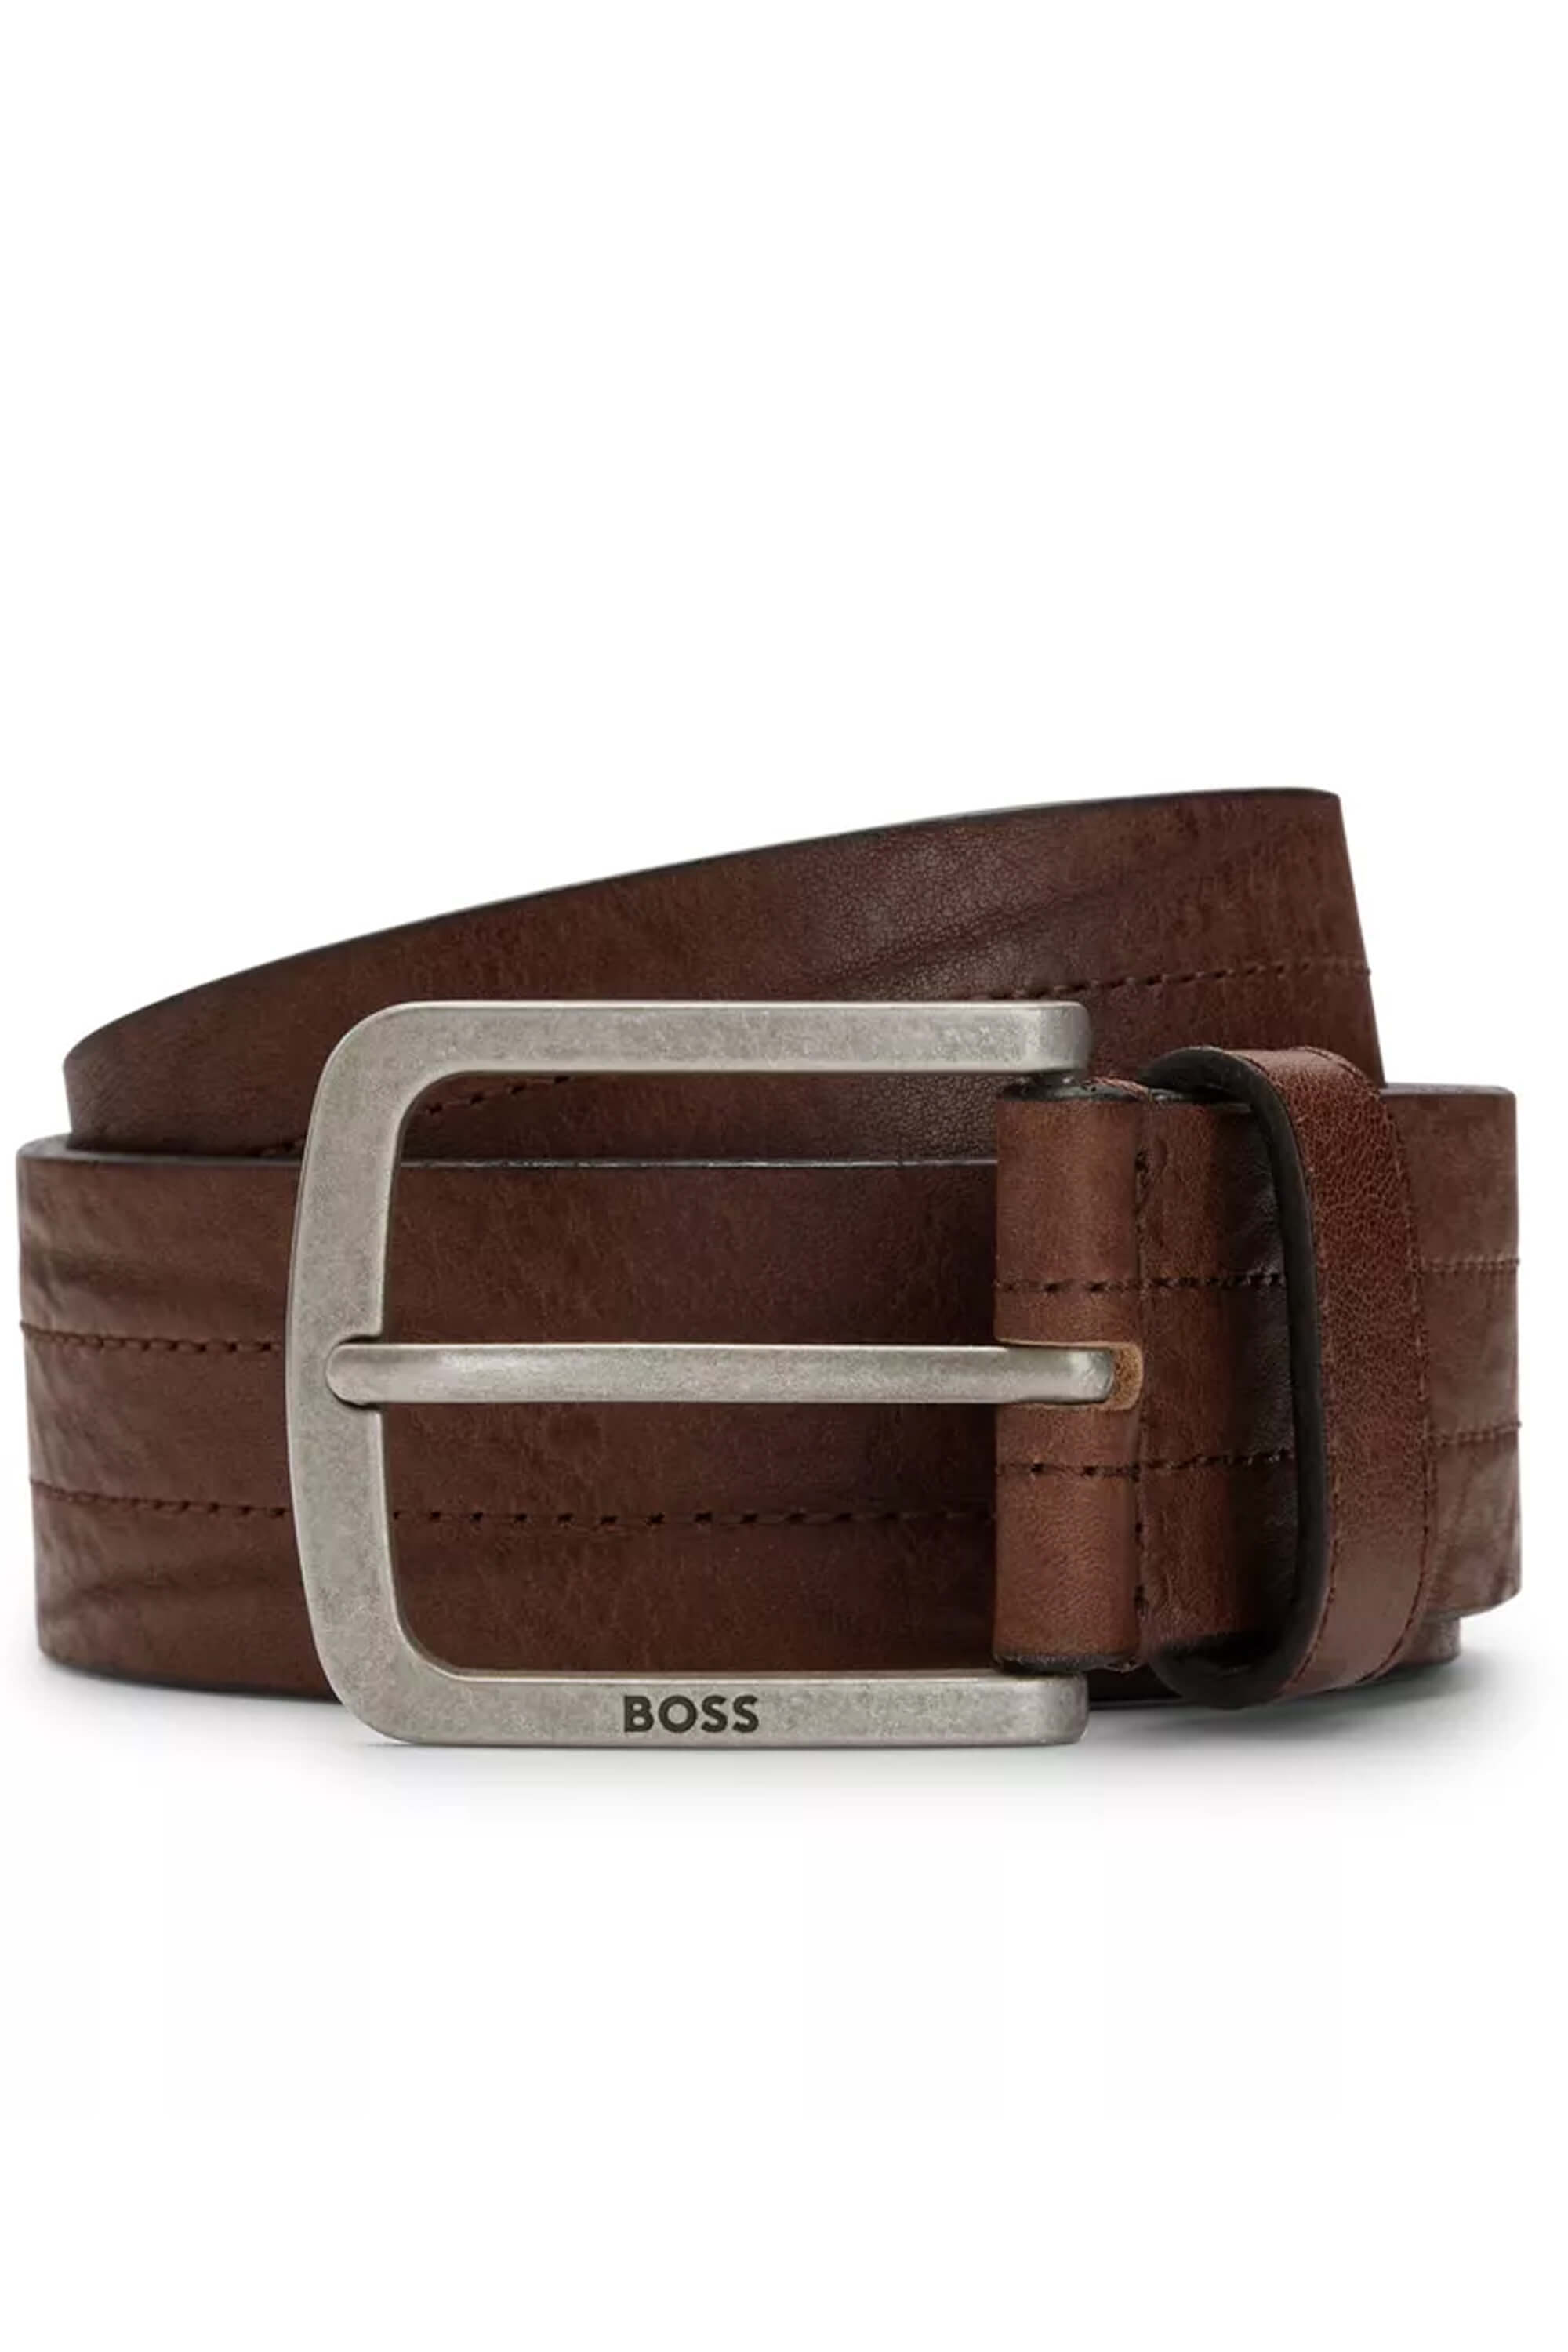 Hugo Boss Jor Belt Medium Brown